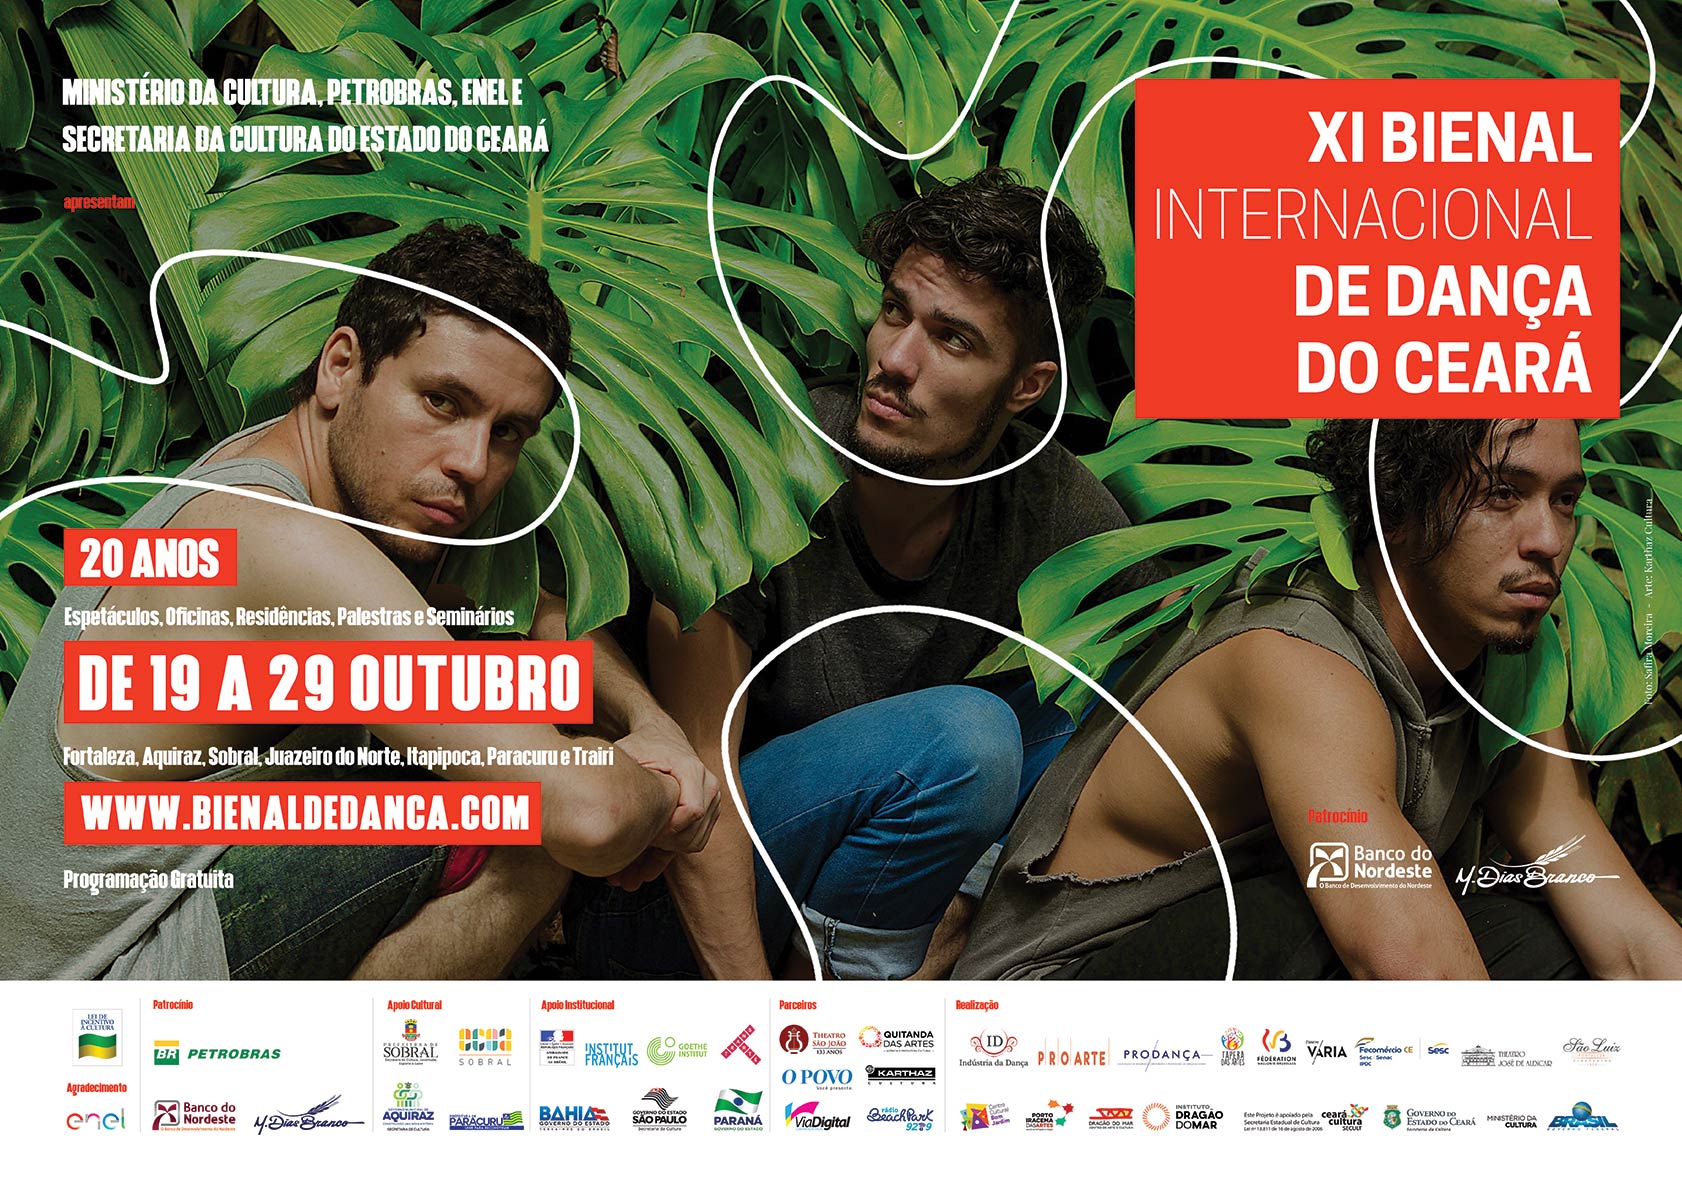 XI Bienal Internacional de Dança do Ceará